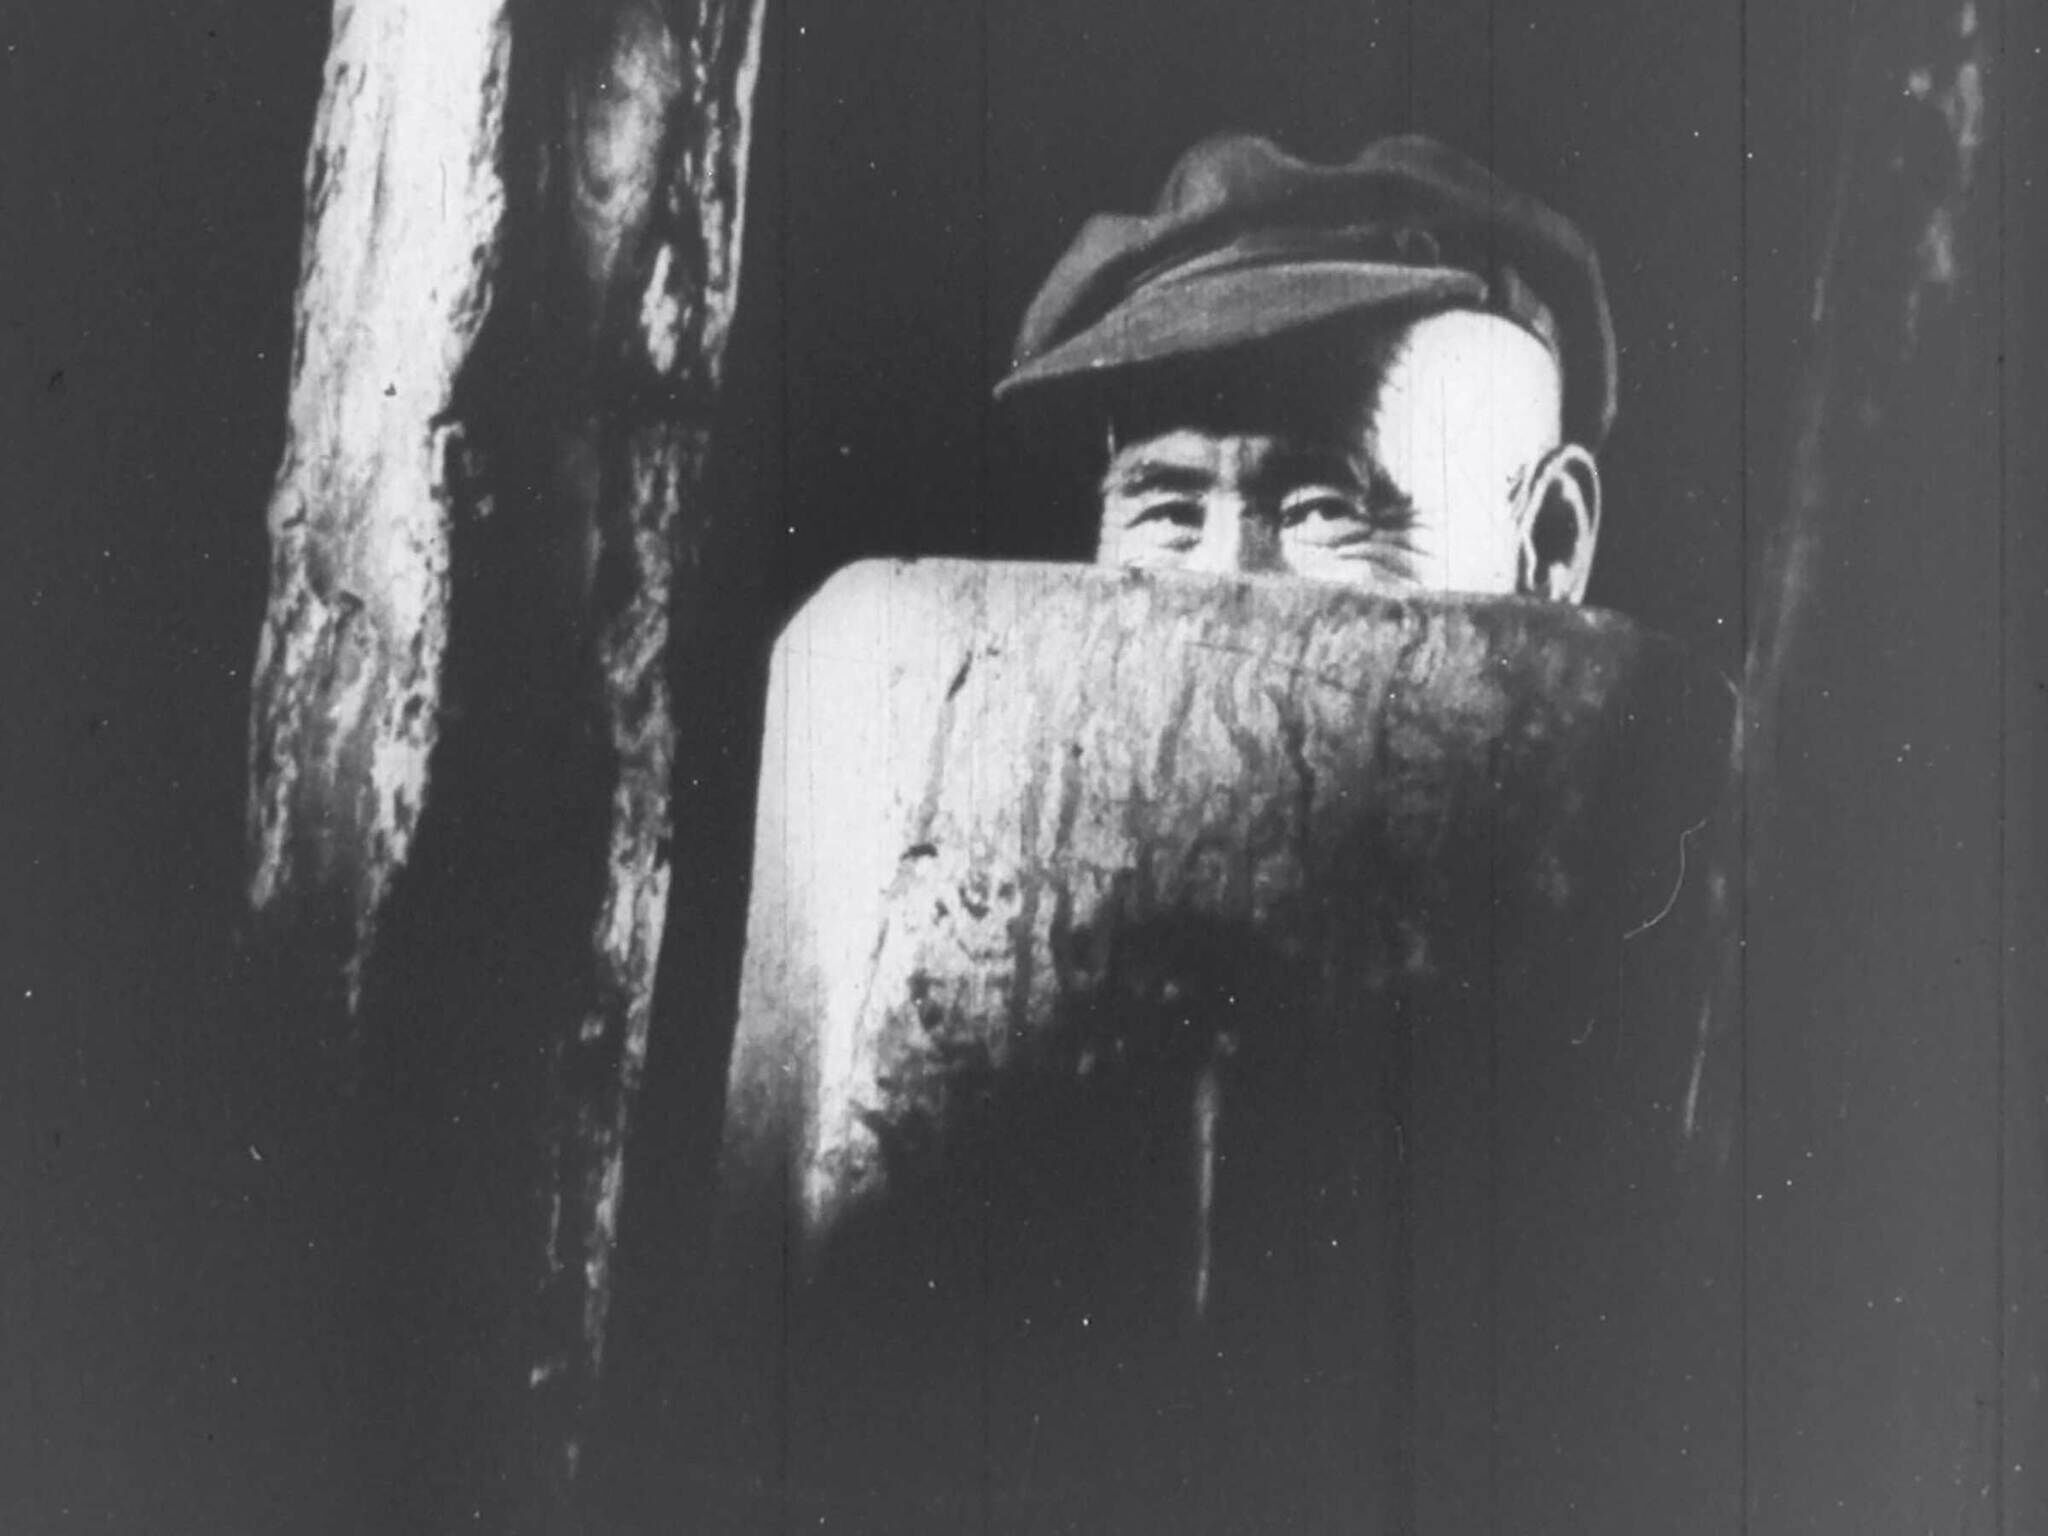 Man in a flat cap peeking through a hole in a wooden fence.